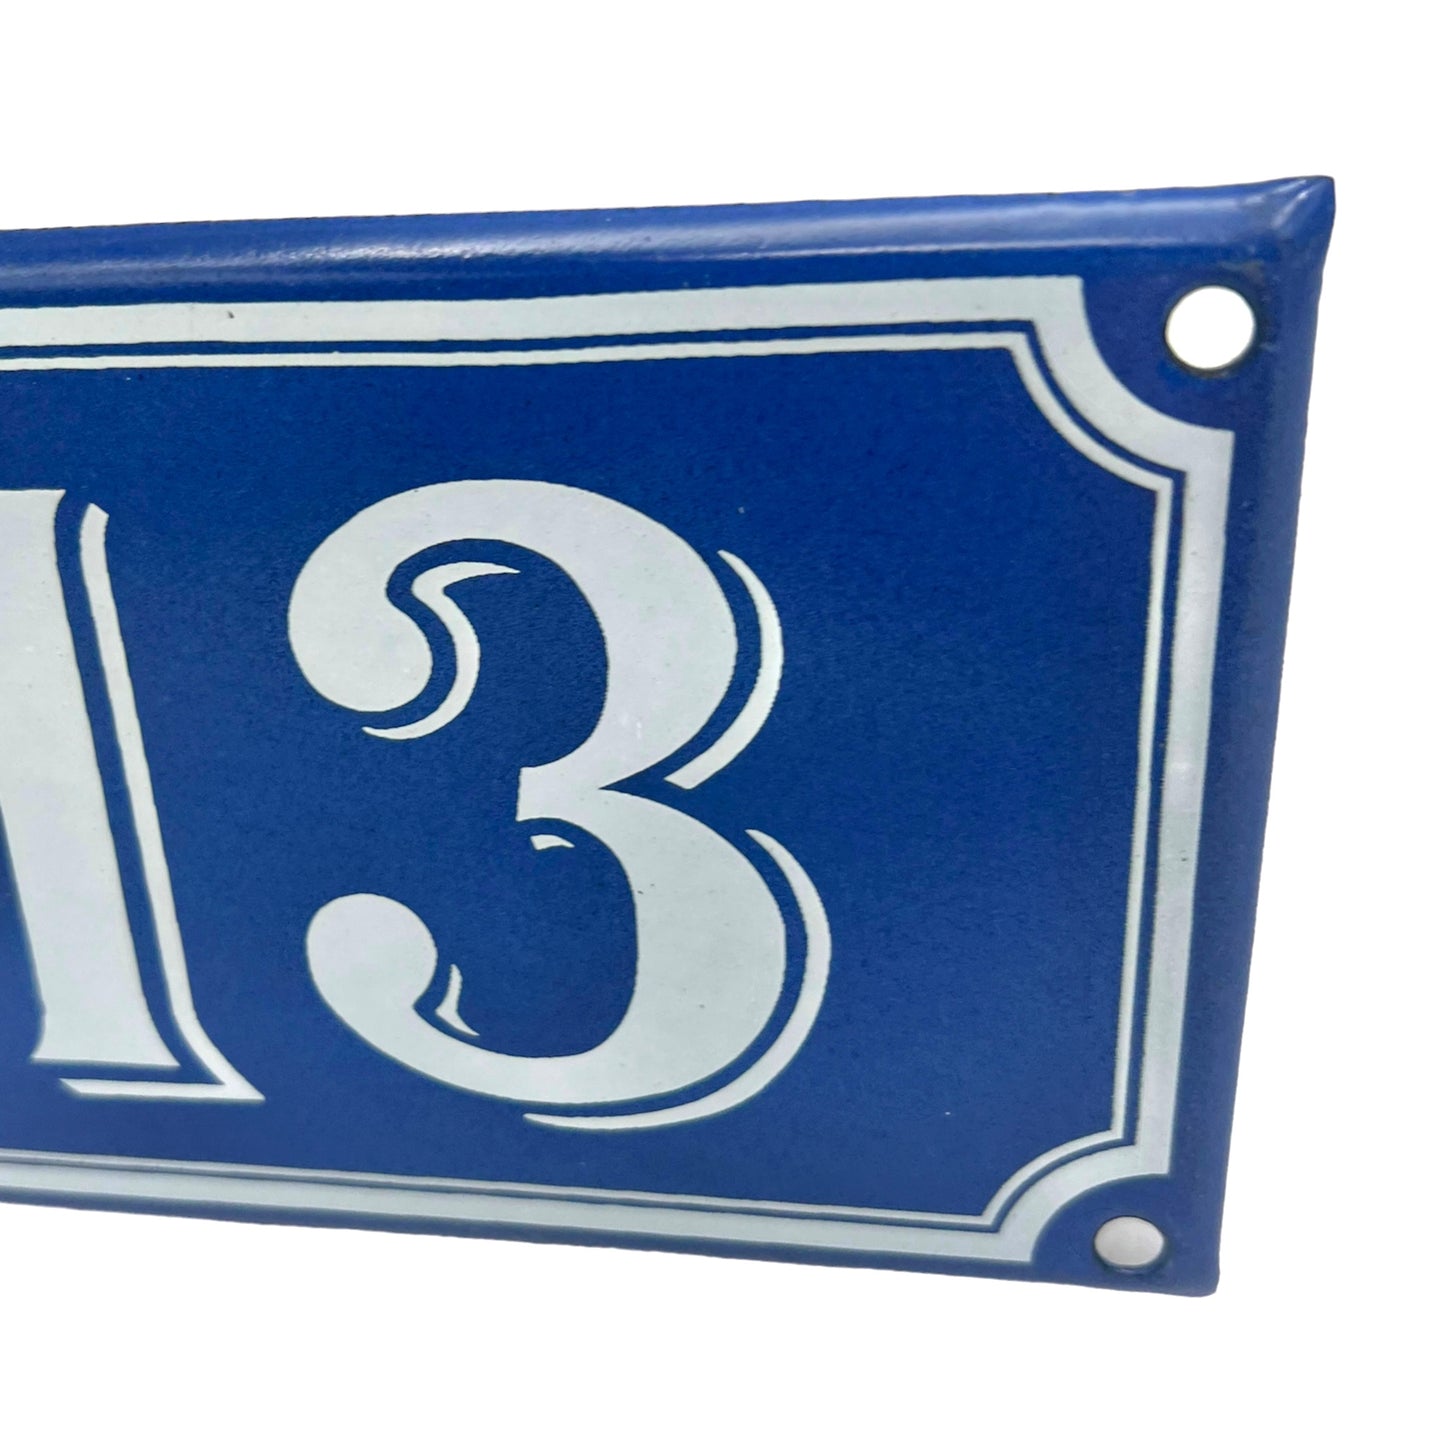 French House Number 13, French Vintage Enamel Door 13, Genuine Blue Metal Number